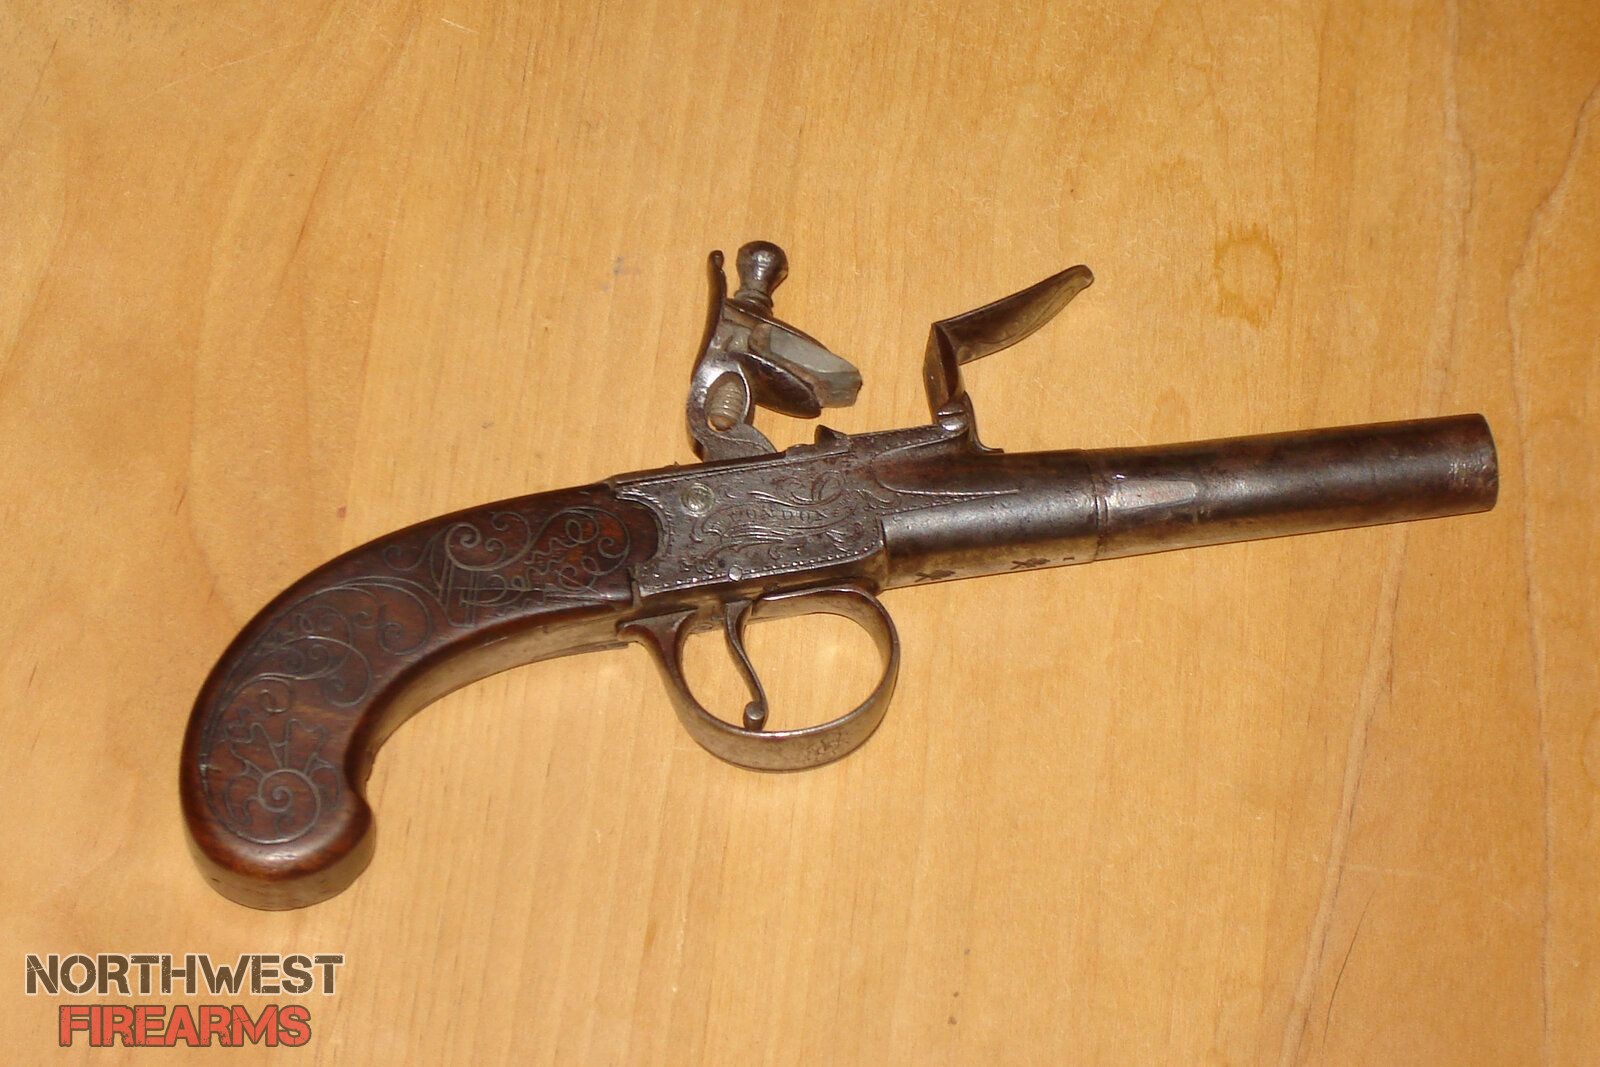 Joseph Barbar pistol circa 1760's